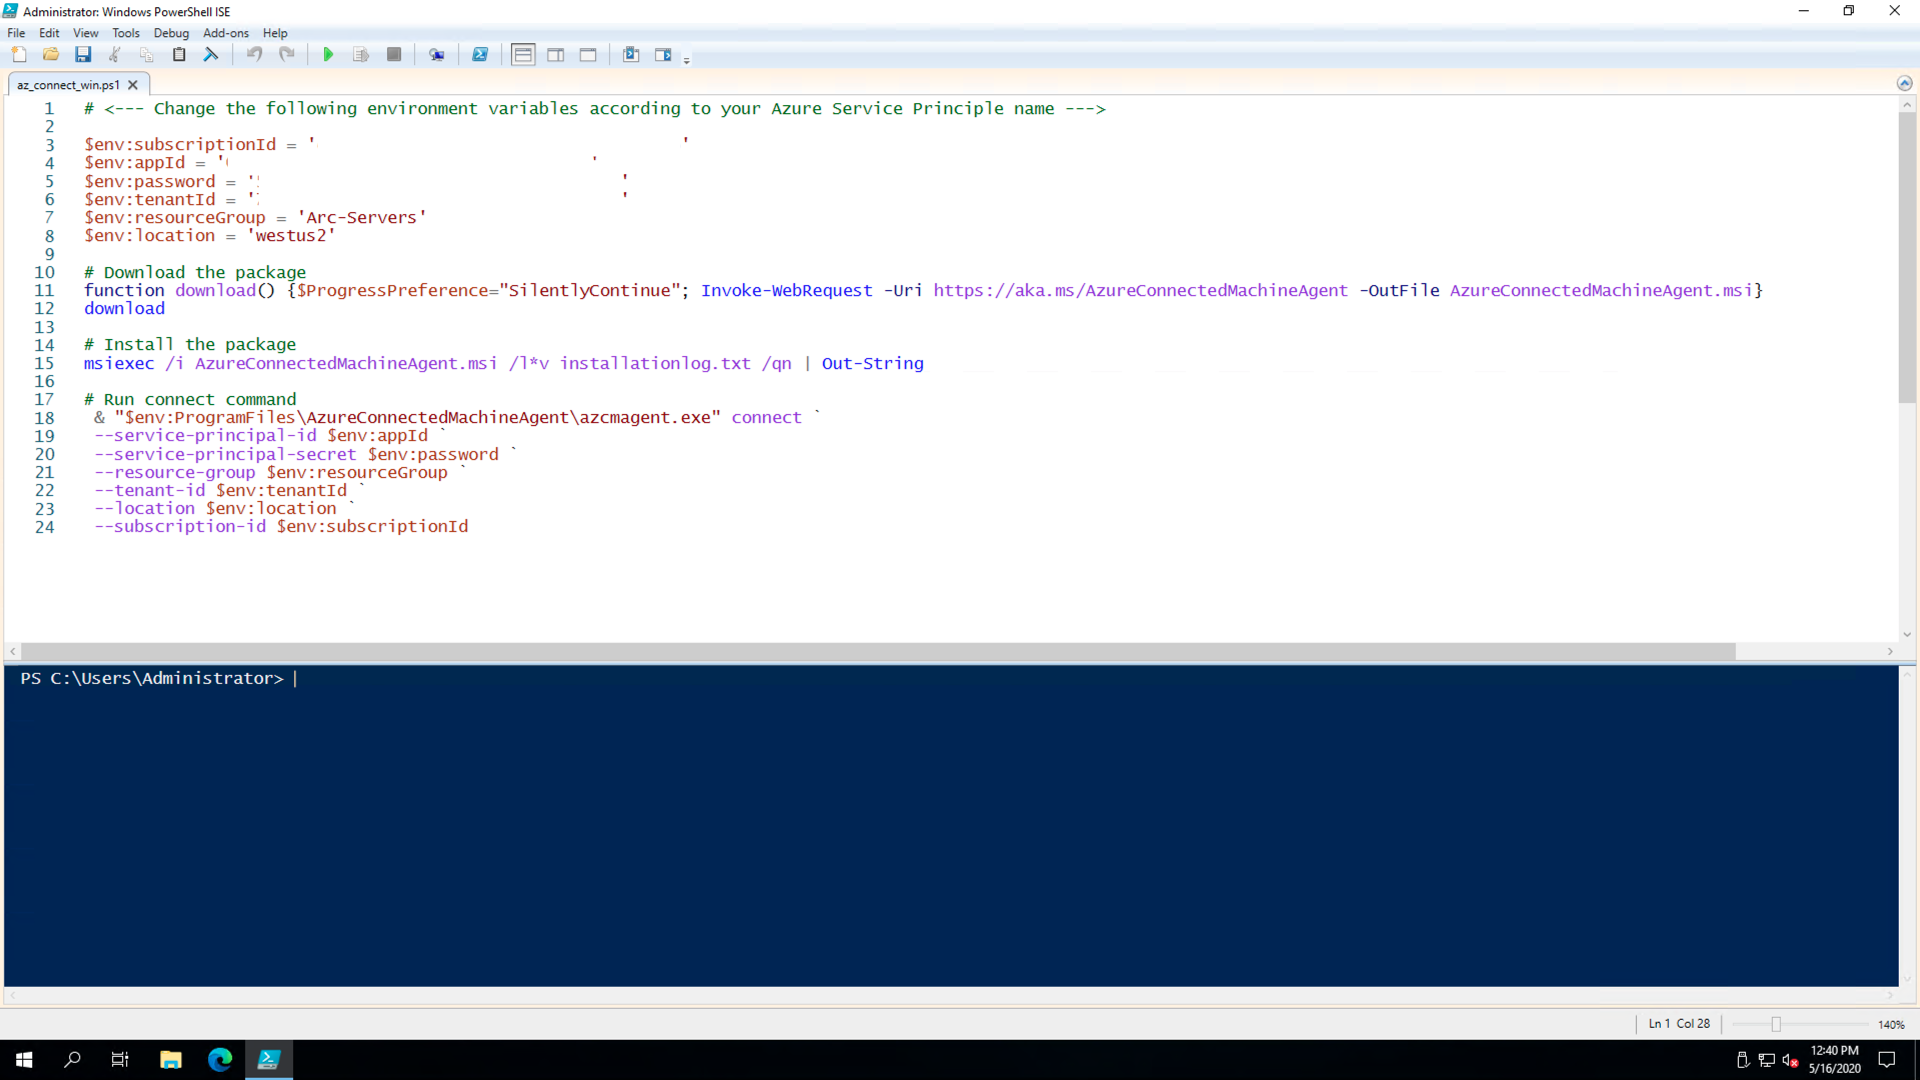 A screenshot of the az_connect_win.ps1 Windows script.